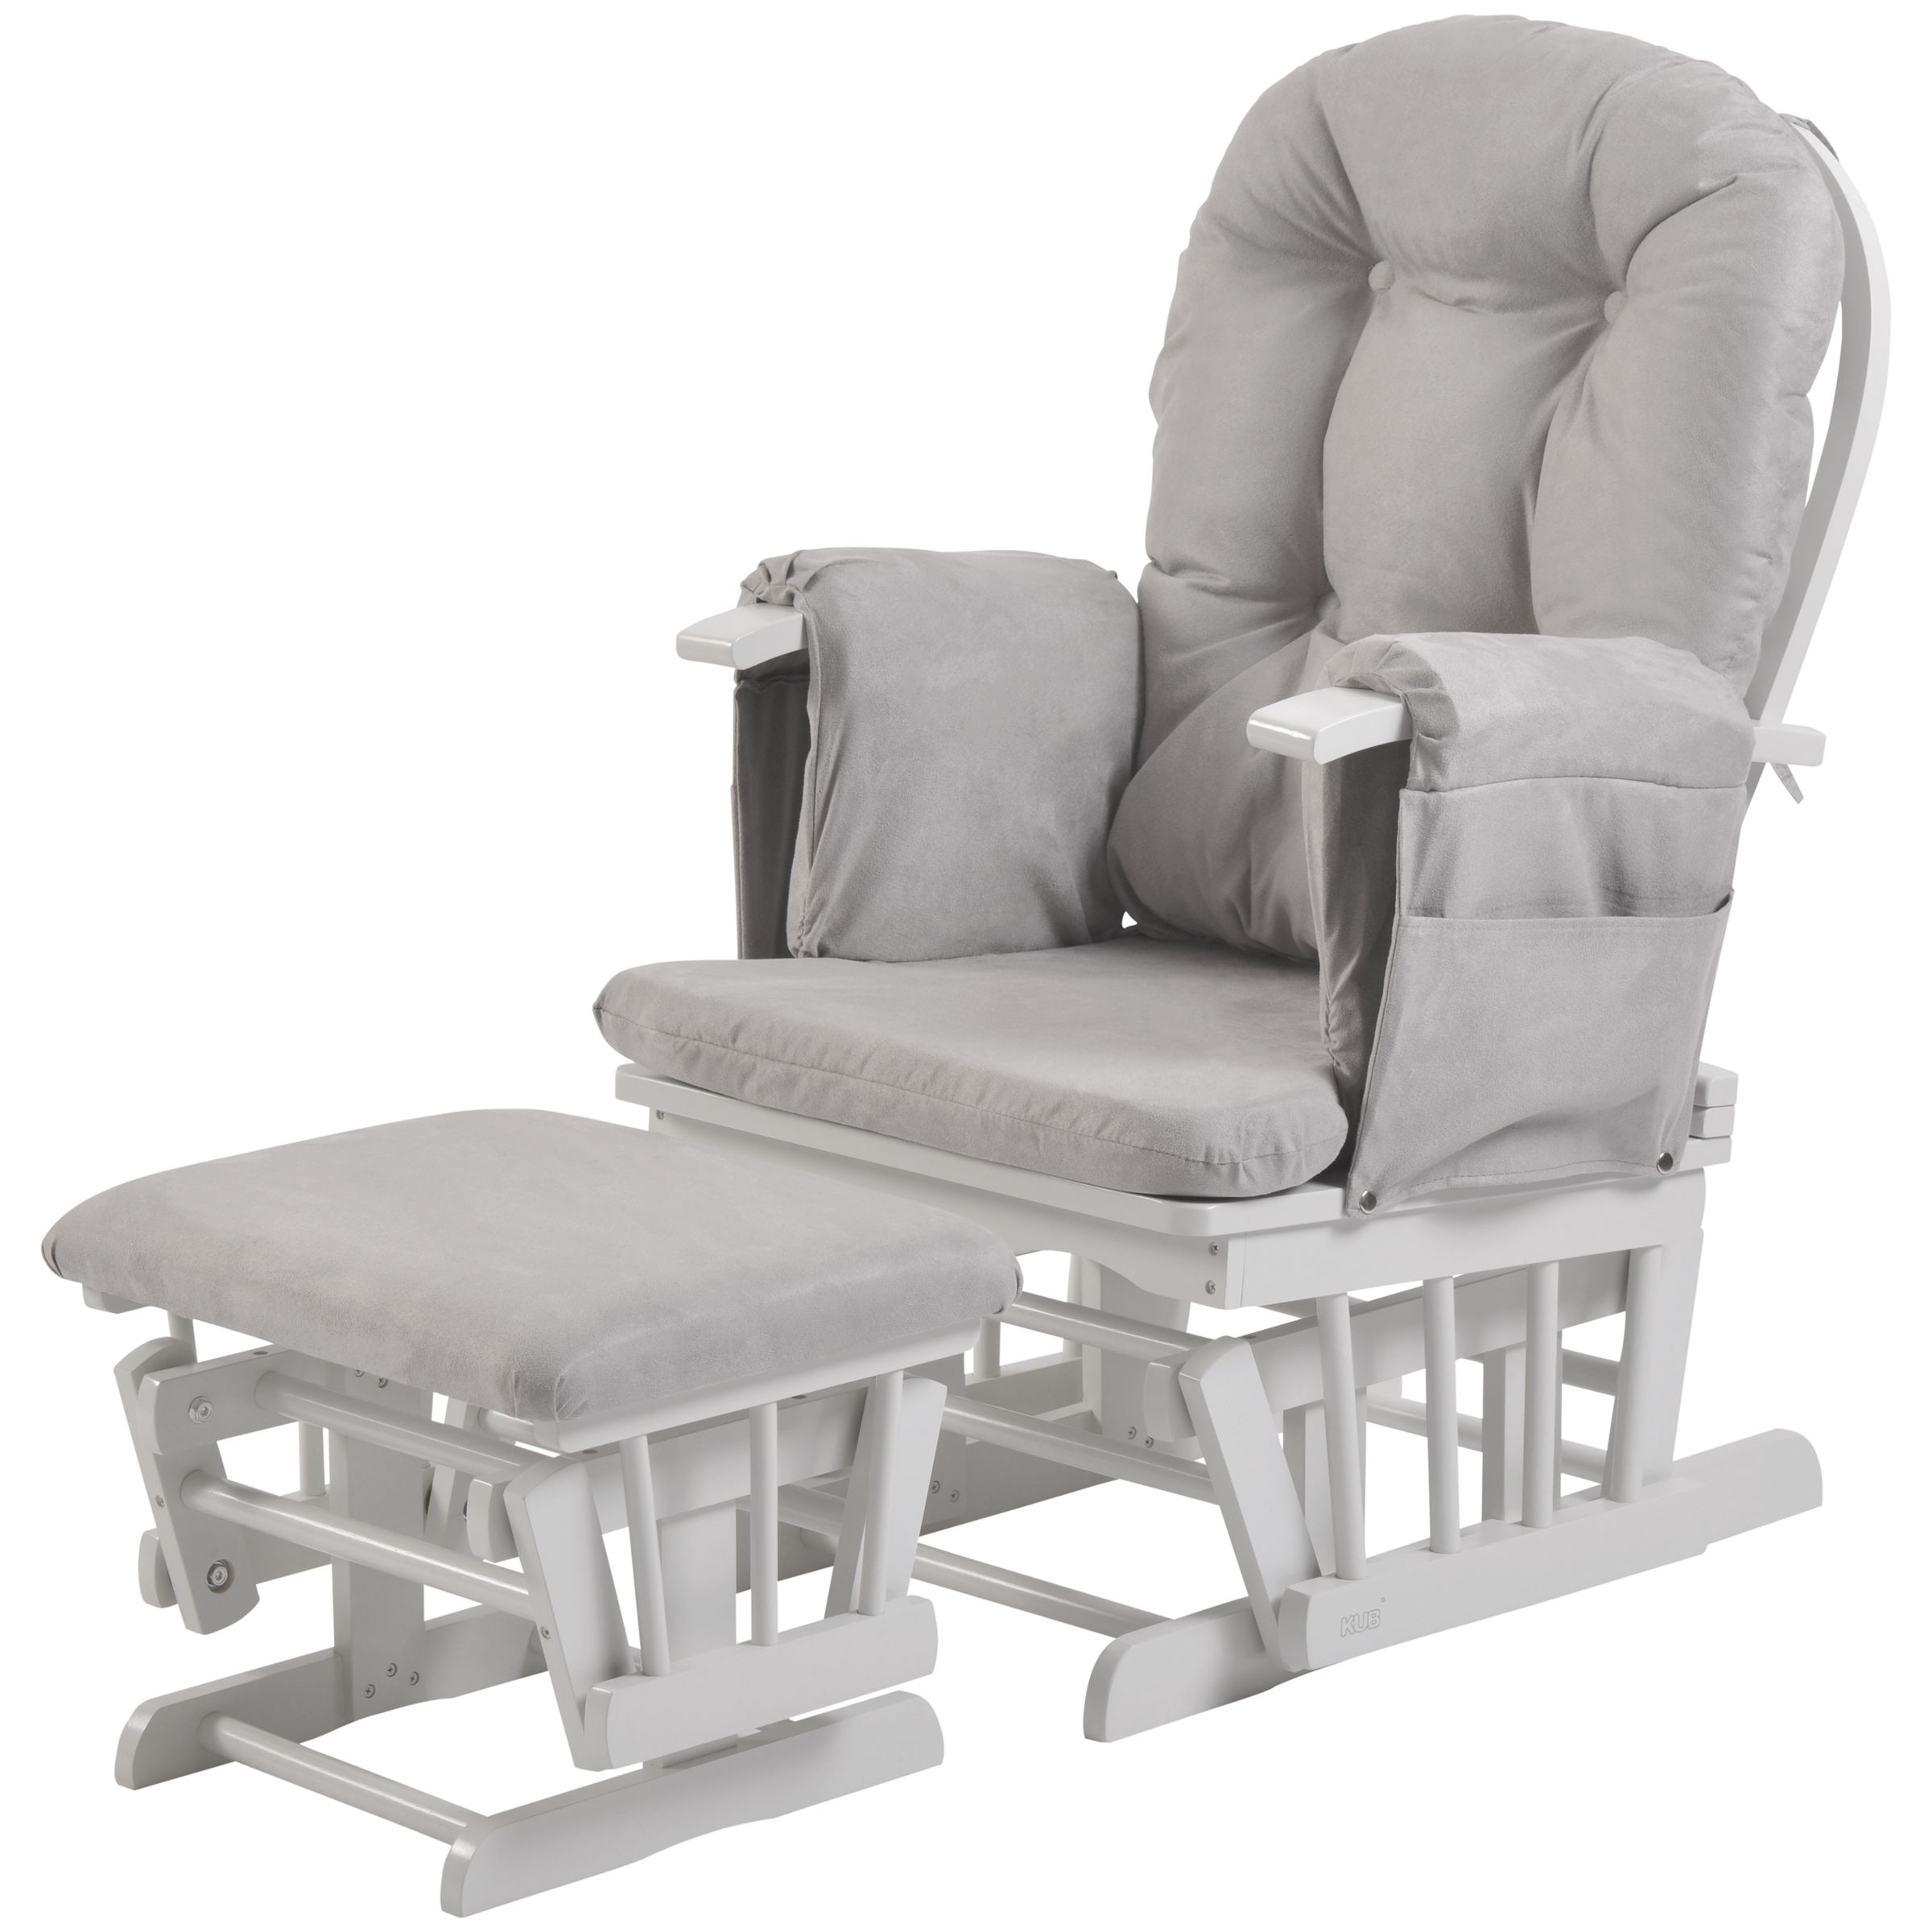 Kub Haywood Reclining Glider Nursing Chair and Footstool, Grey at John